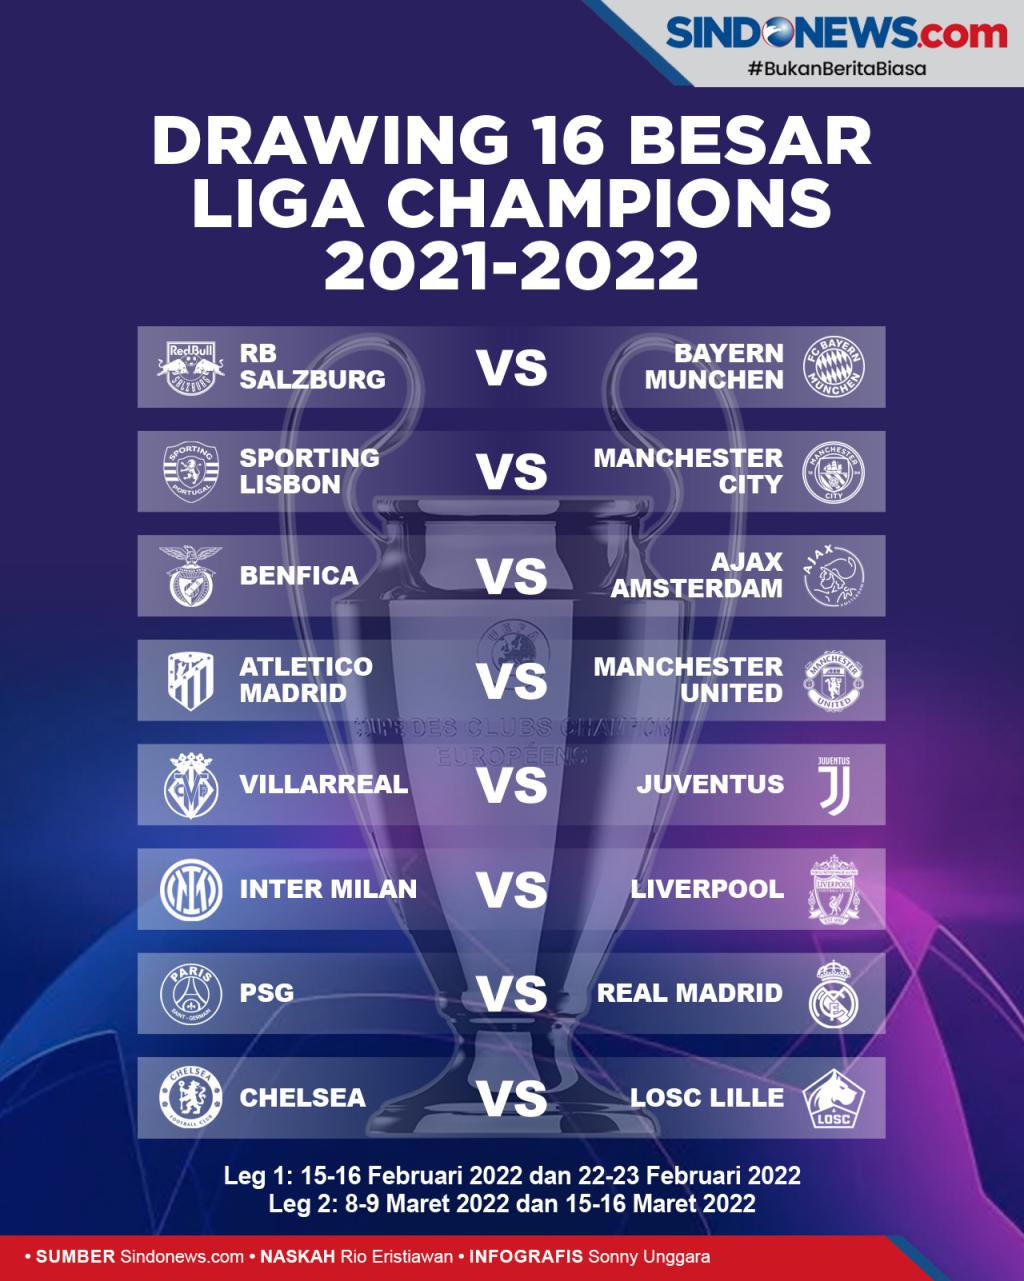 Hasil drawing 16 besar liga champion 2021 2022